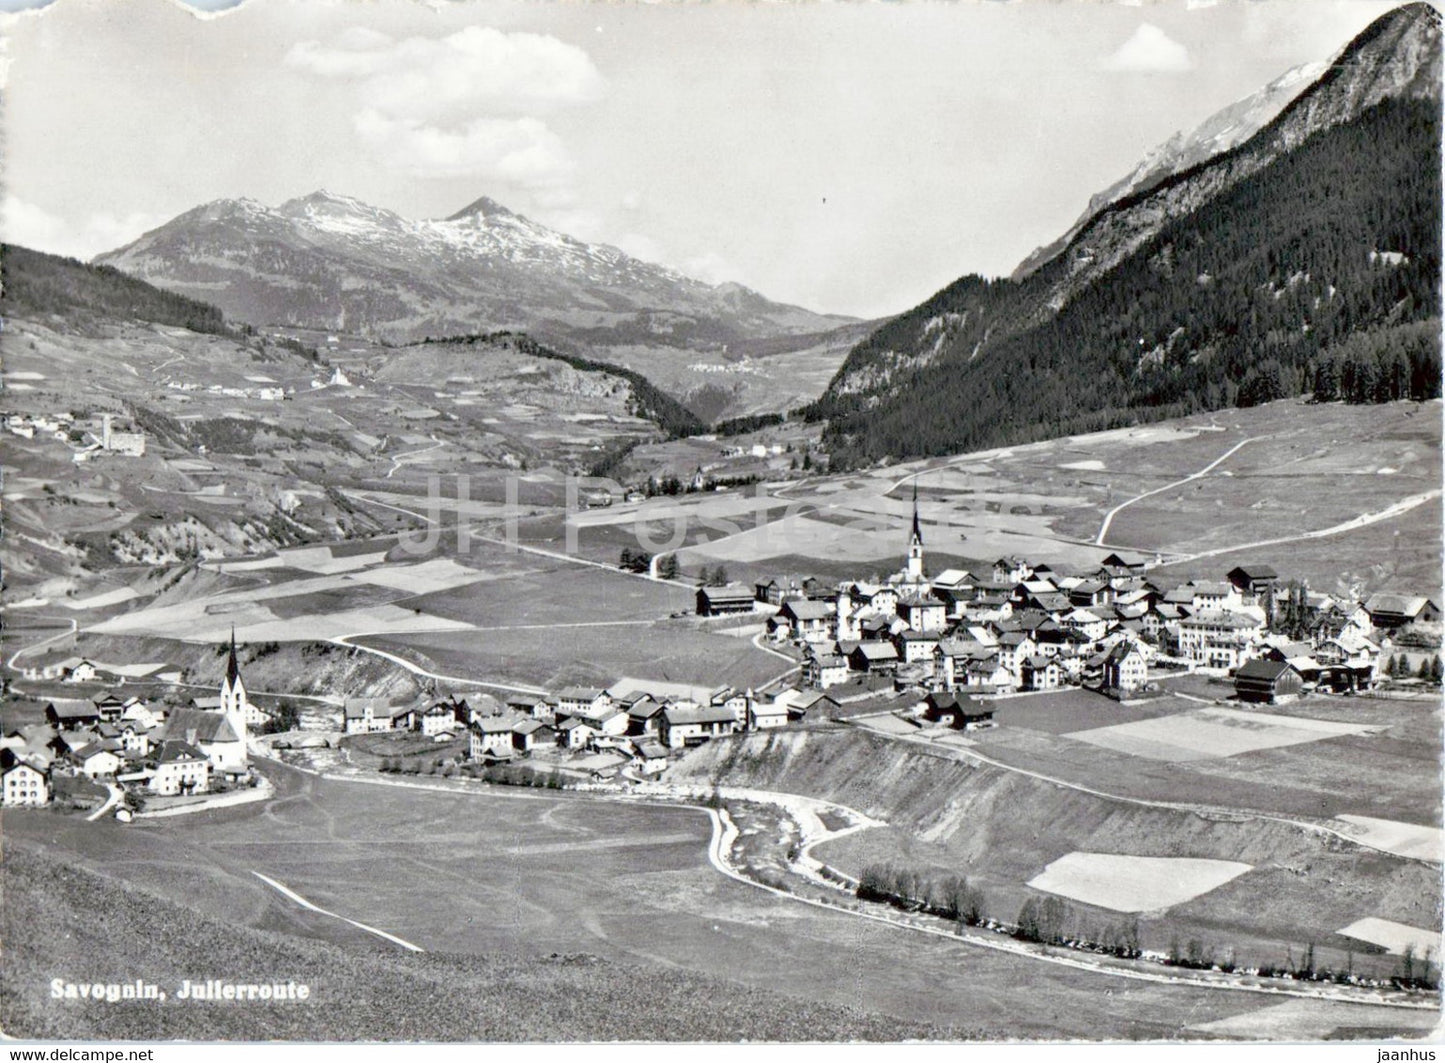 Savognin - Jullerroute - Feldpost - military mail - 33758 - Switzerland - used - JH Postcards